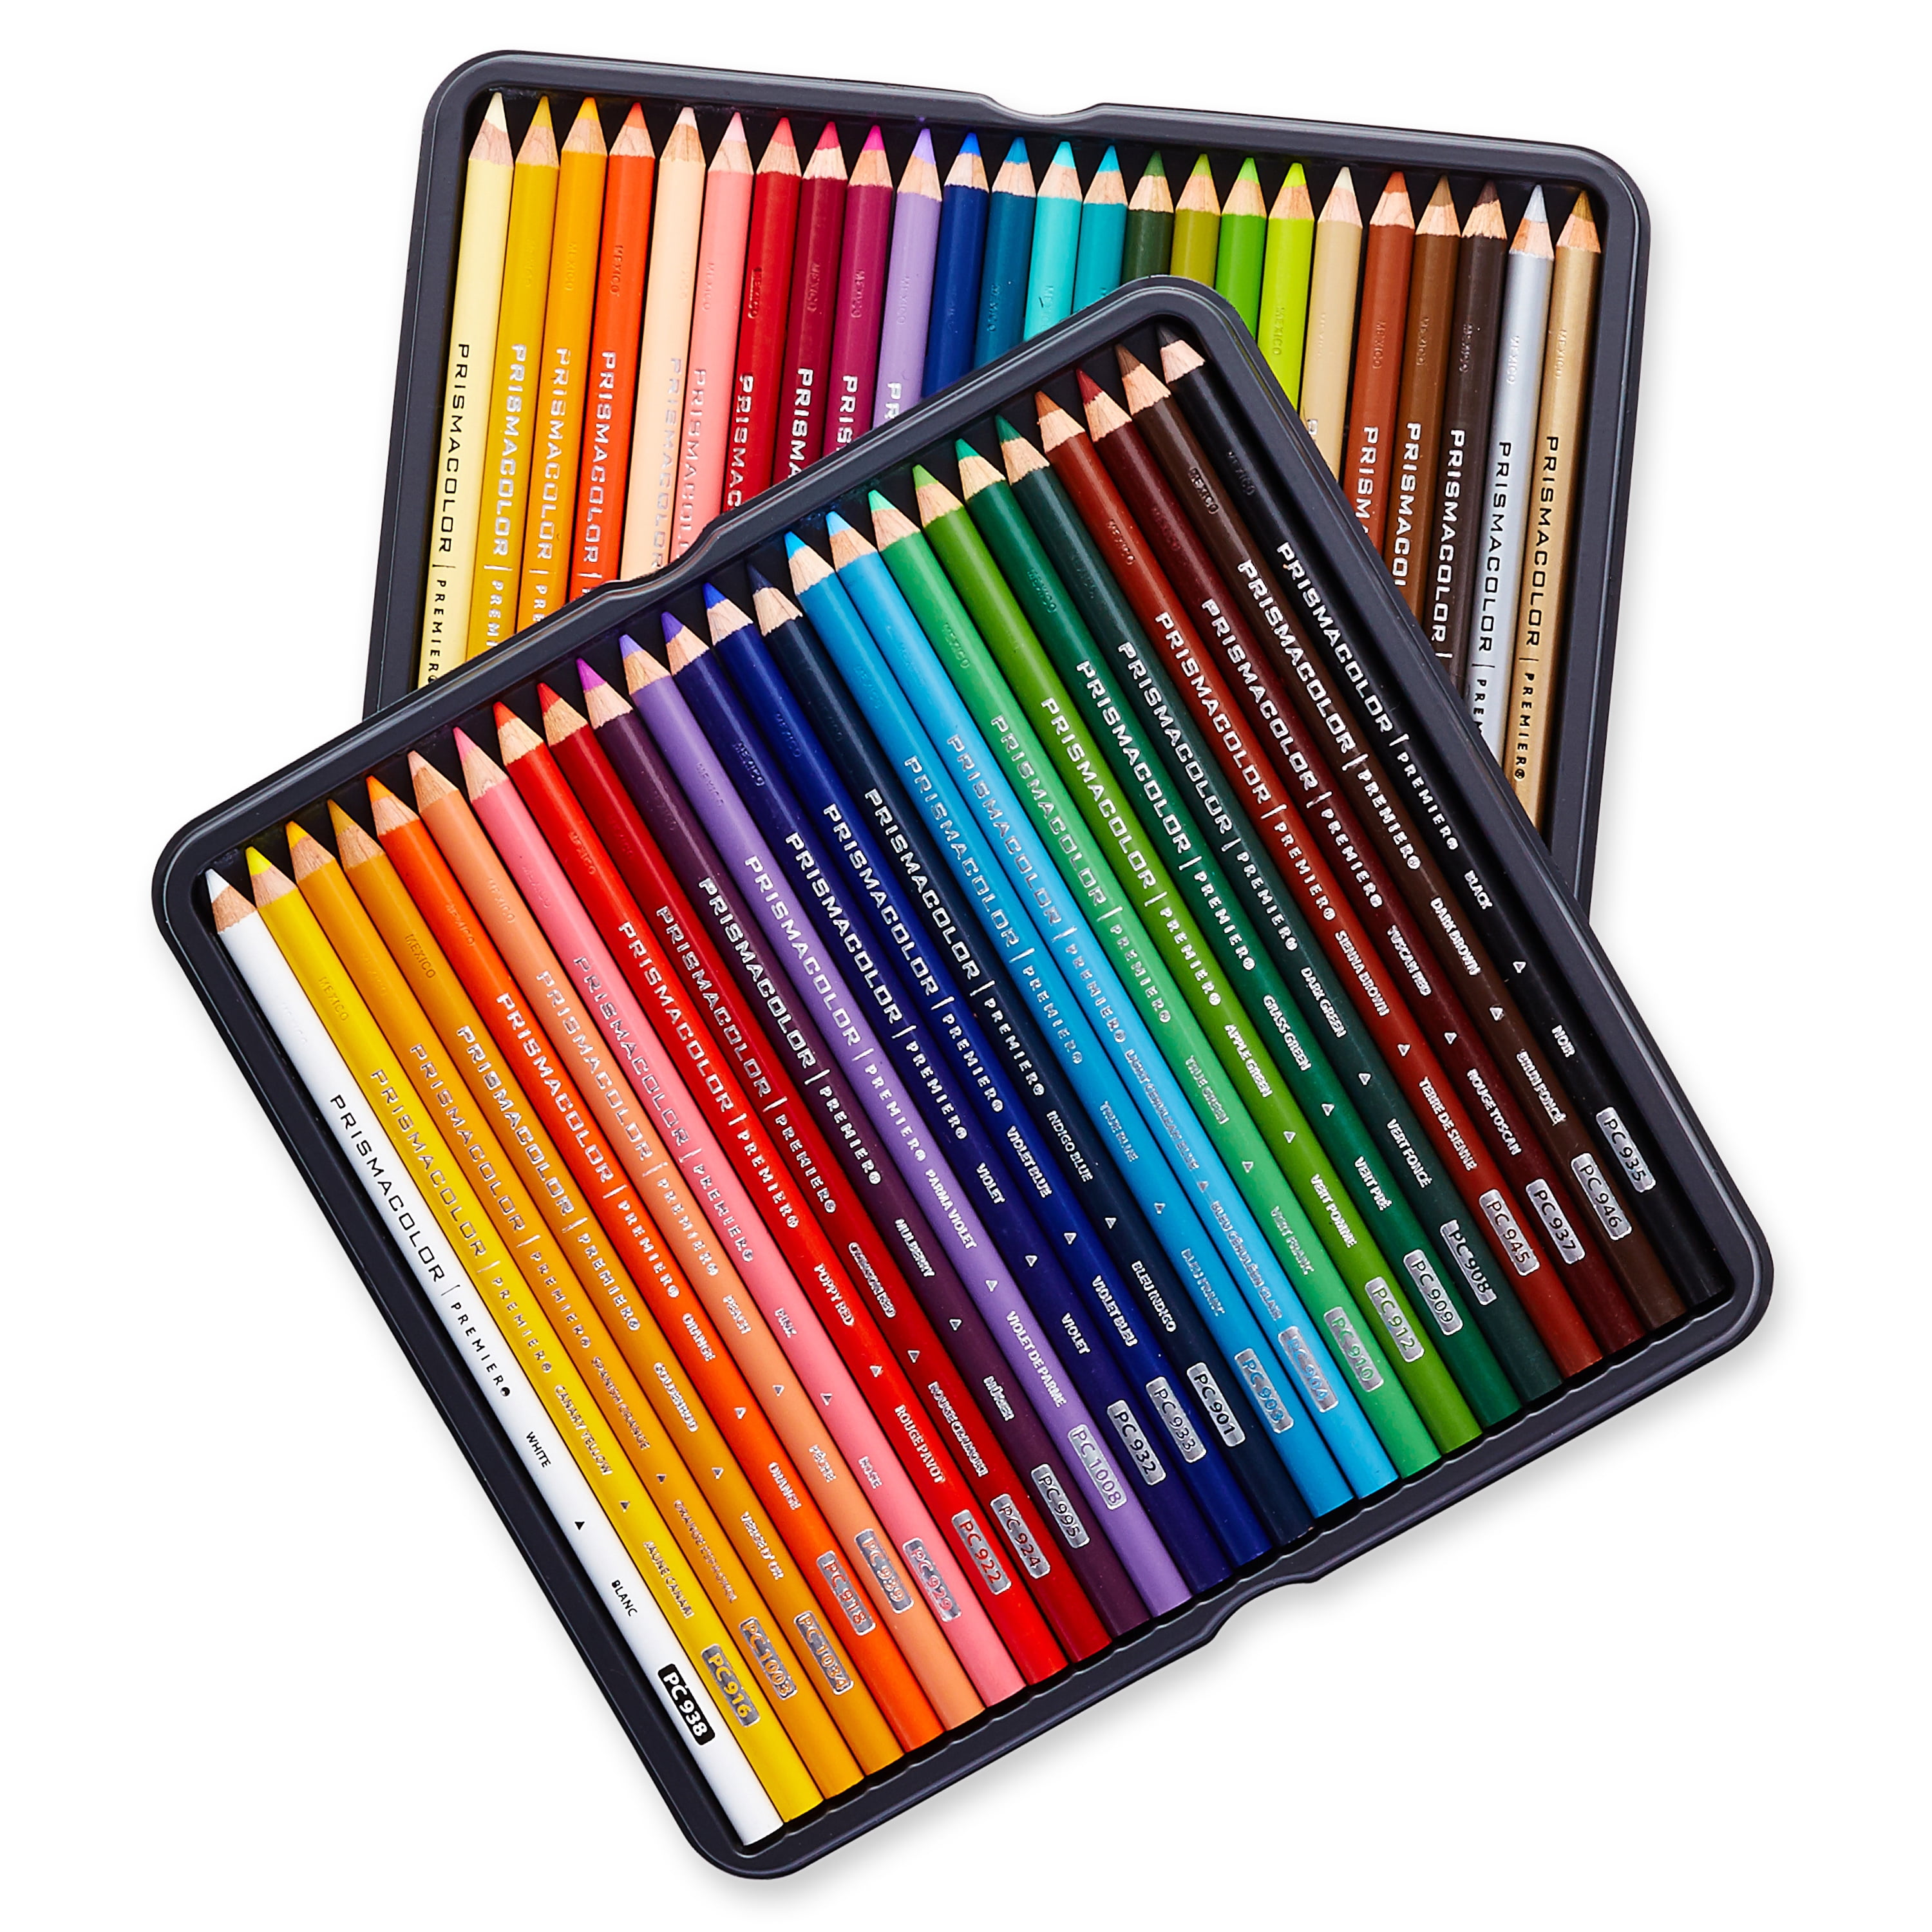 Basics Premium Colored Pencils, Soft Core, 48 Count Set, Multicolor